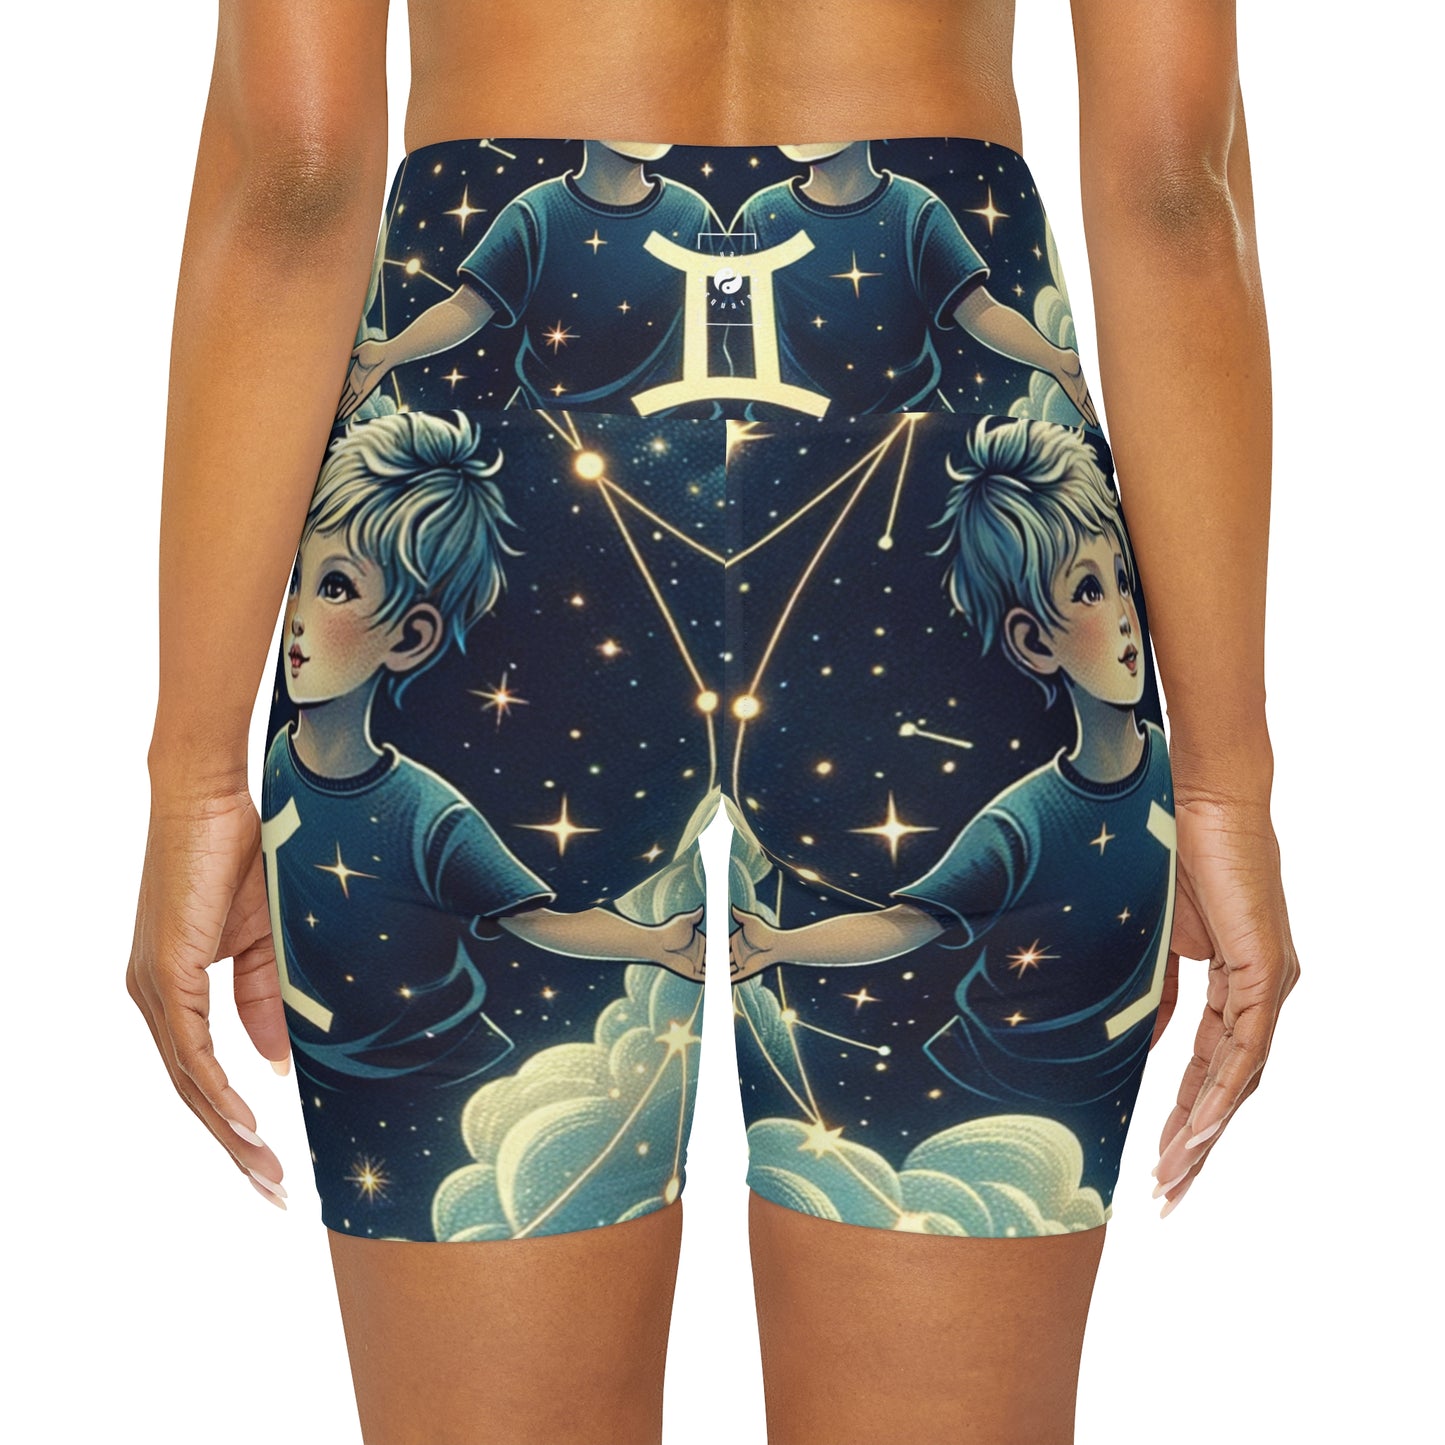 "Celestial Twinfinity" - shorts